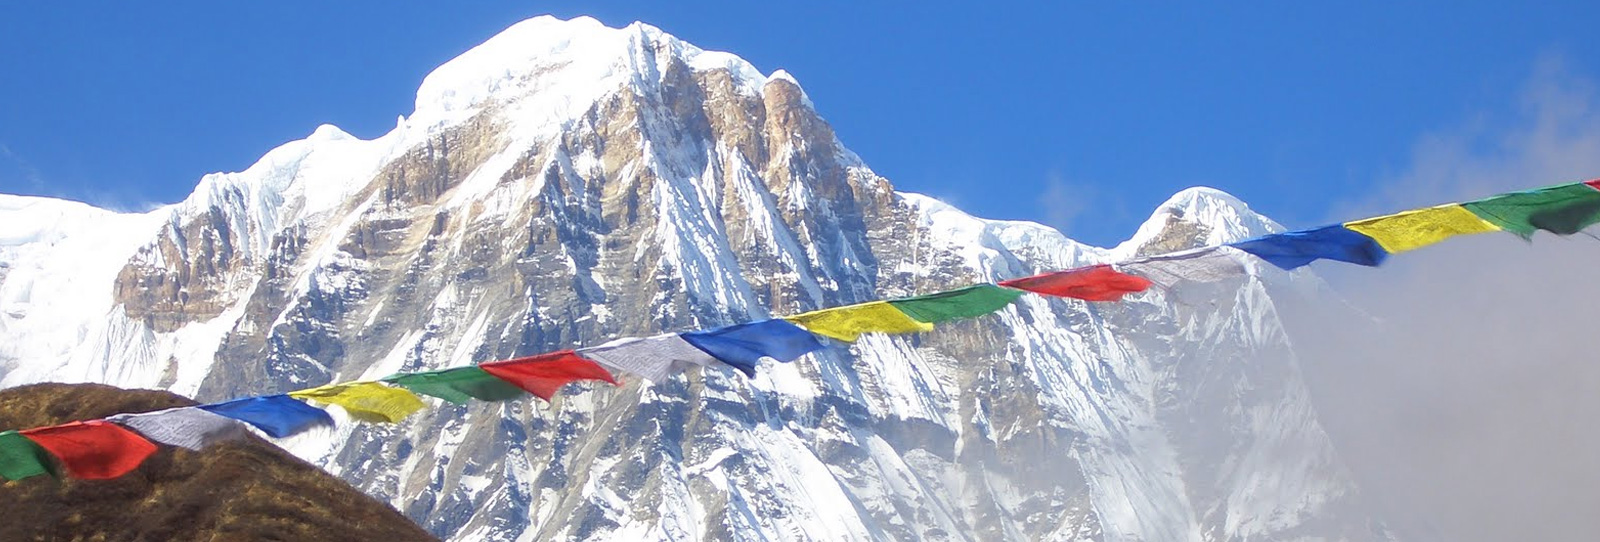 Tharpu Chuli (Tent Peak) Climbing (5500m/19045ft)